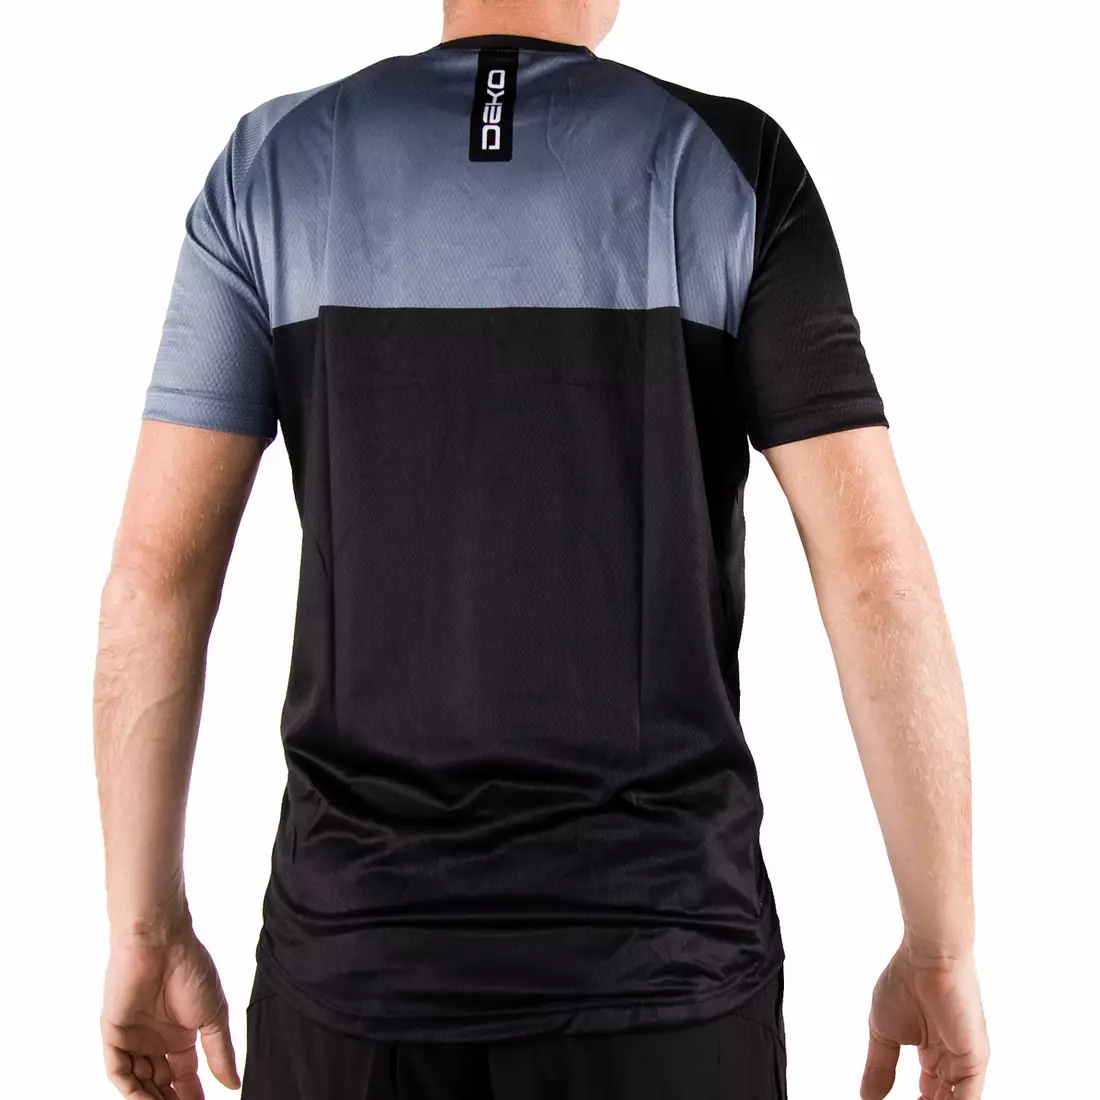 DEKO MTB K1 tricou de ciclism liber, negru-gri